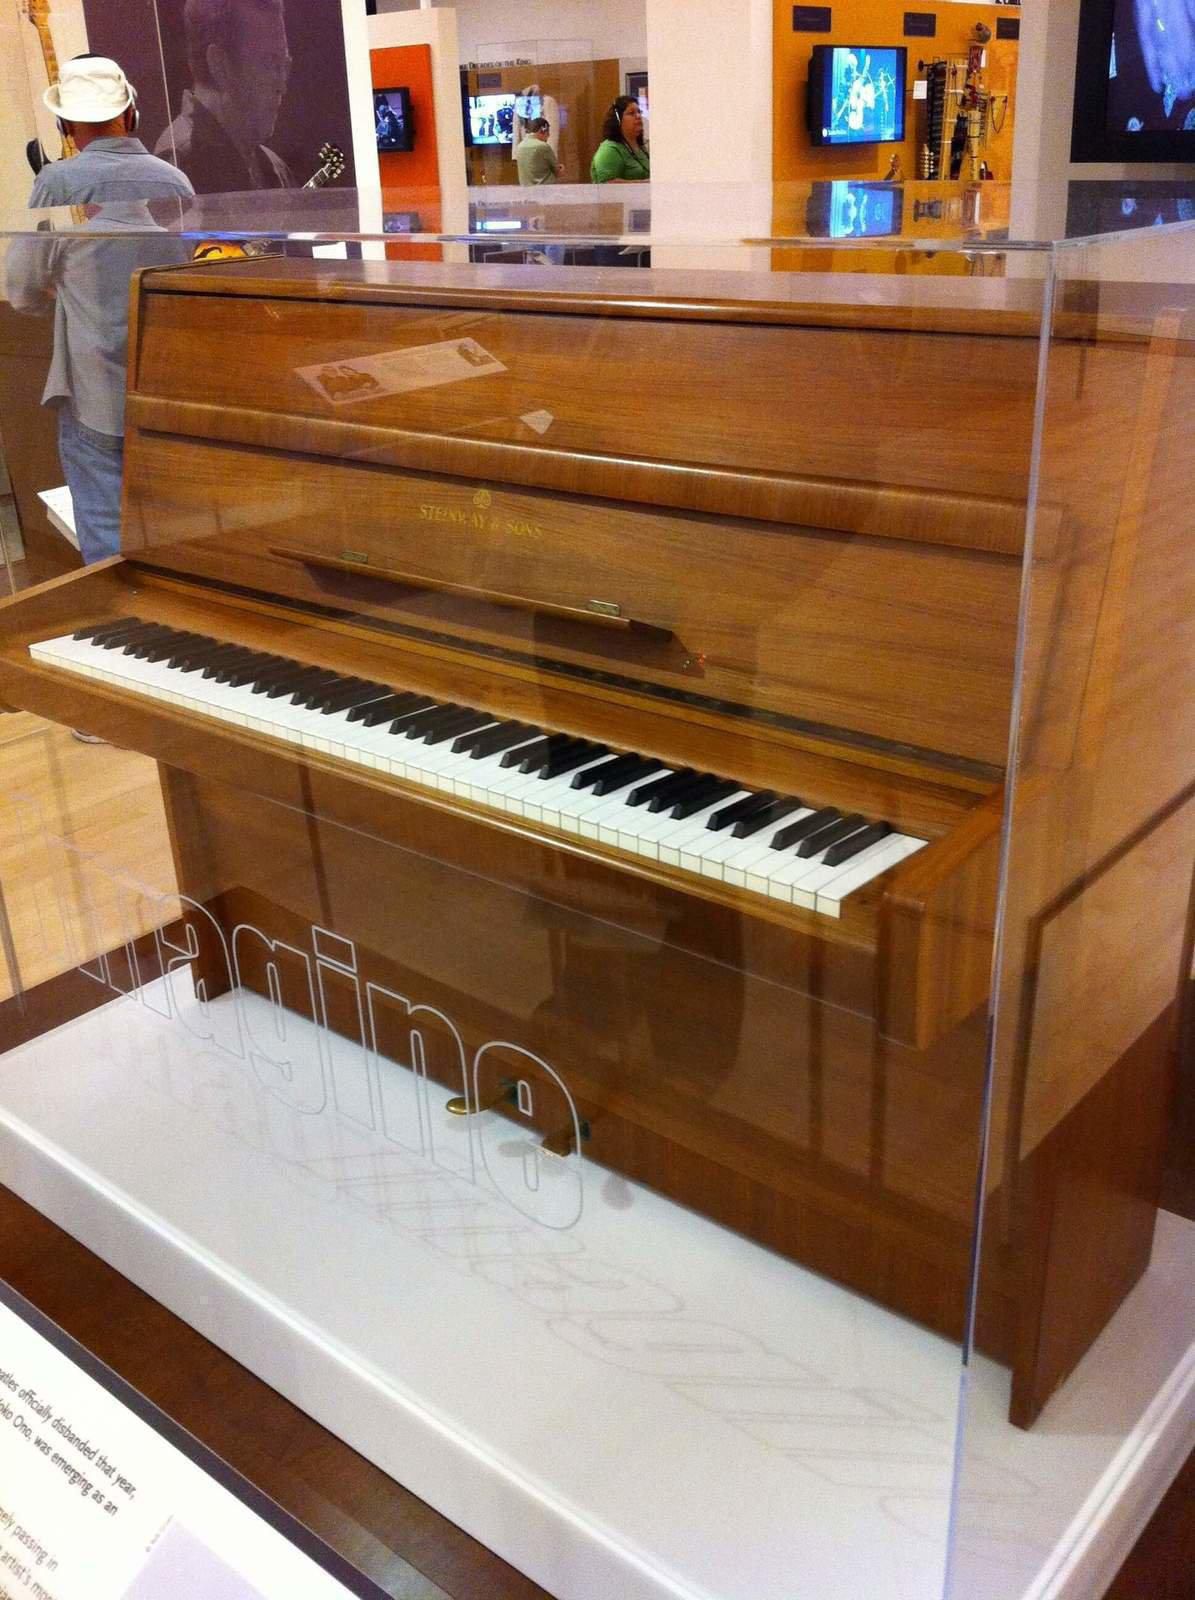 2 One of John Lennons Steinway pianos